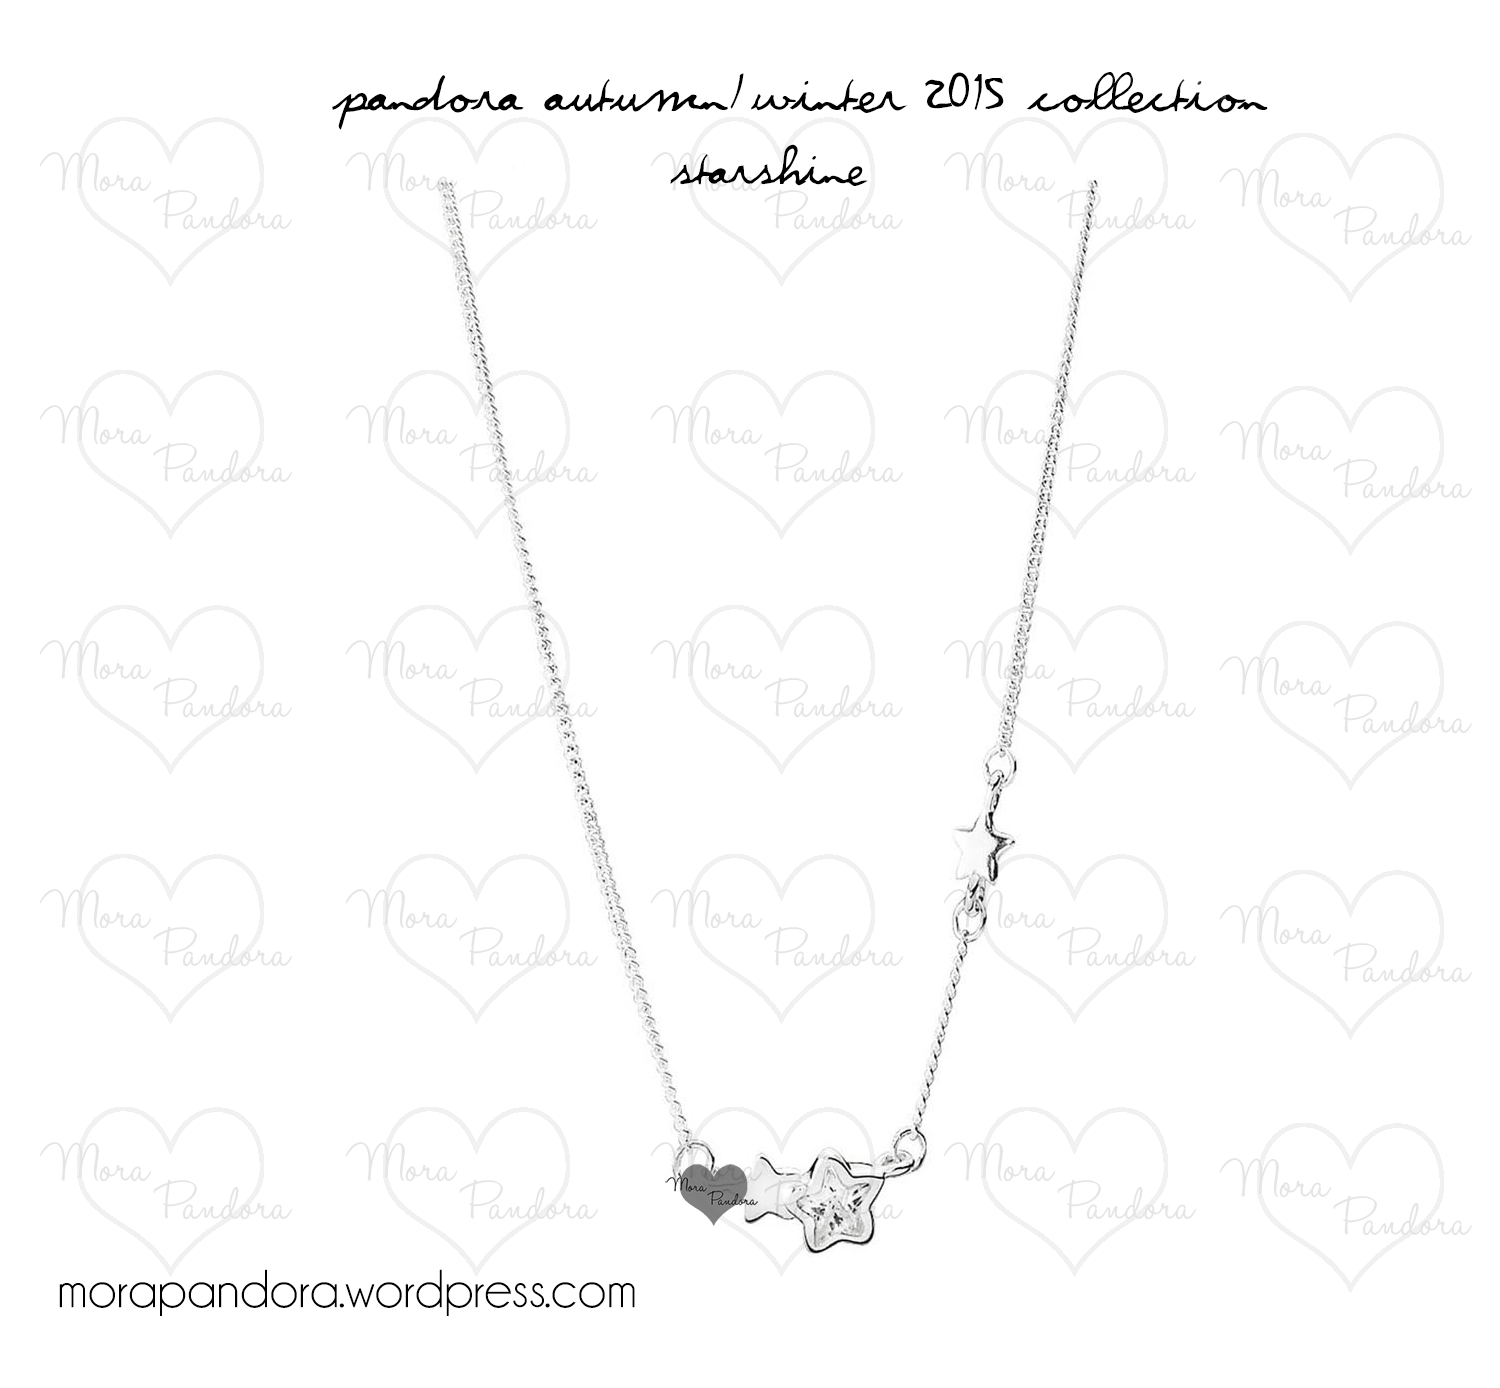 pandora winter 2015 starshine necklace